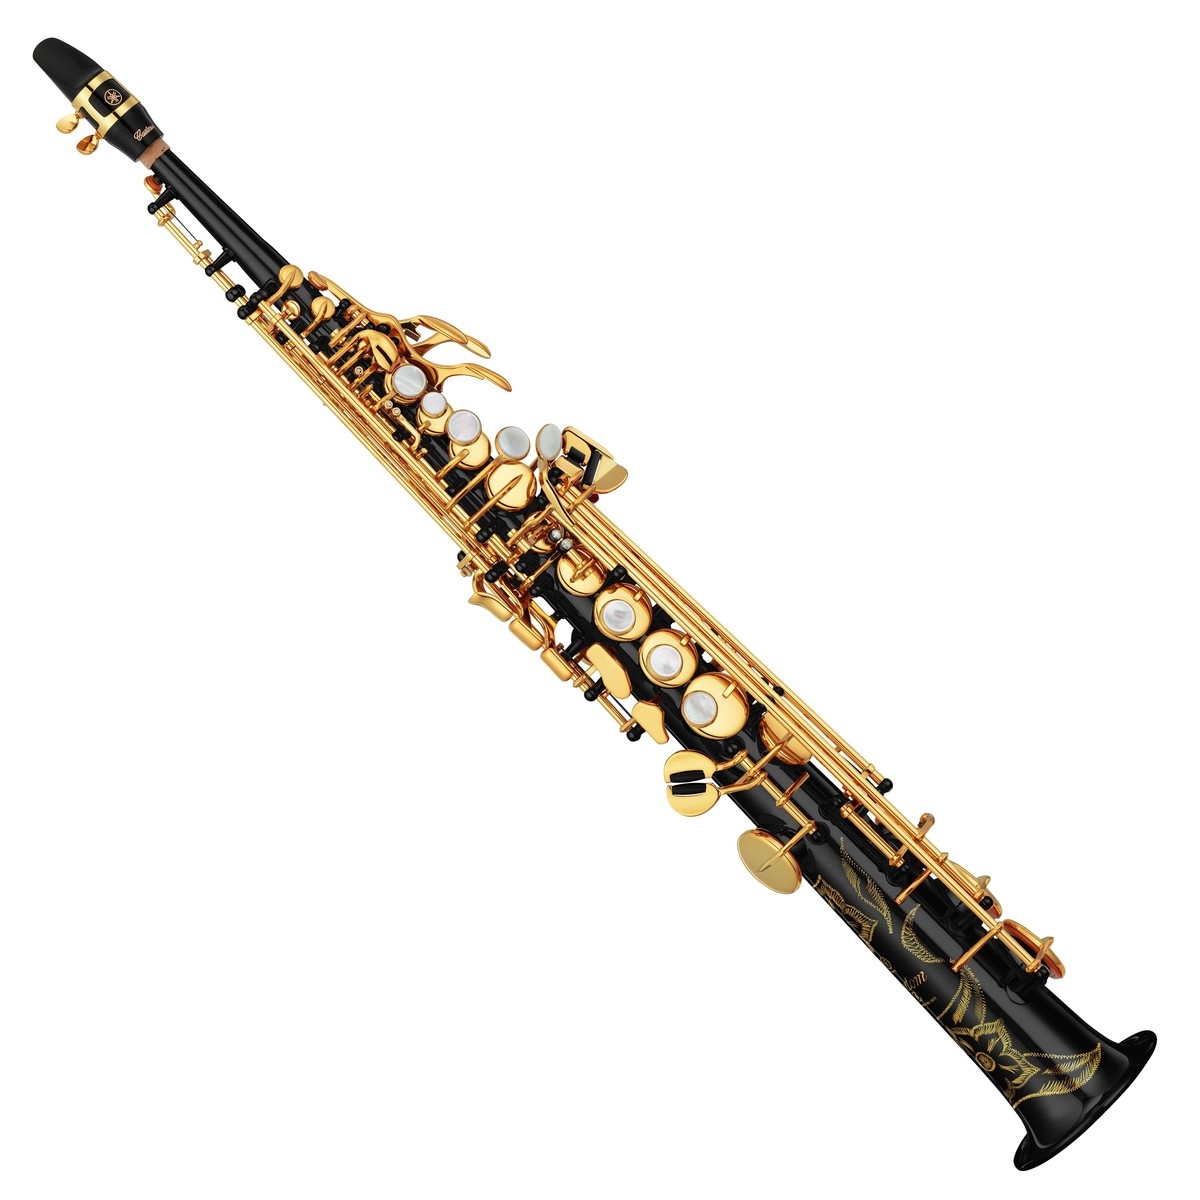 Yamaha YSS-82ZB Custom laqué noir- saxophone soprano professionnel